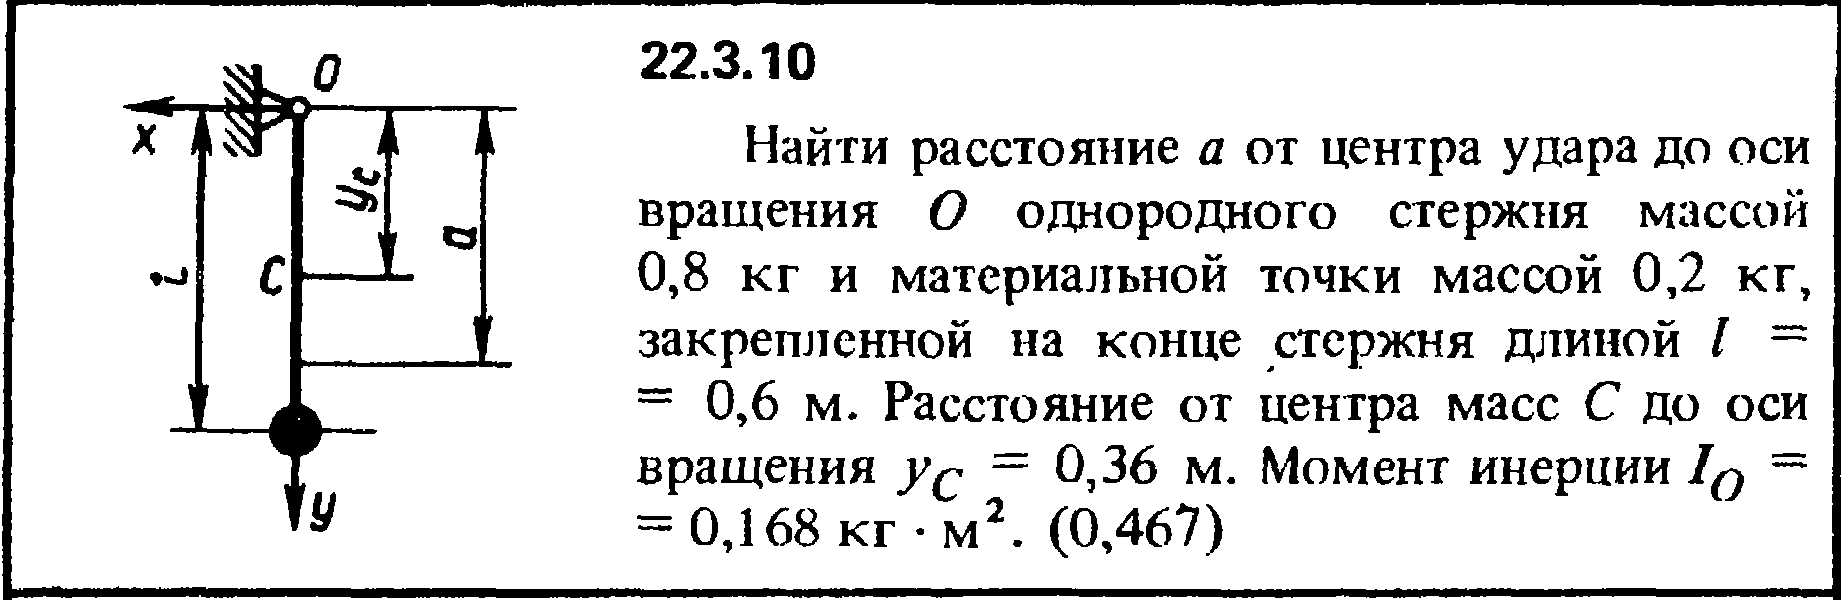 Решение 22.3.10 из сборника (решебника) Кепе О.Е. 1989